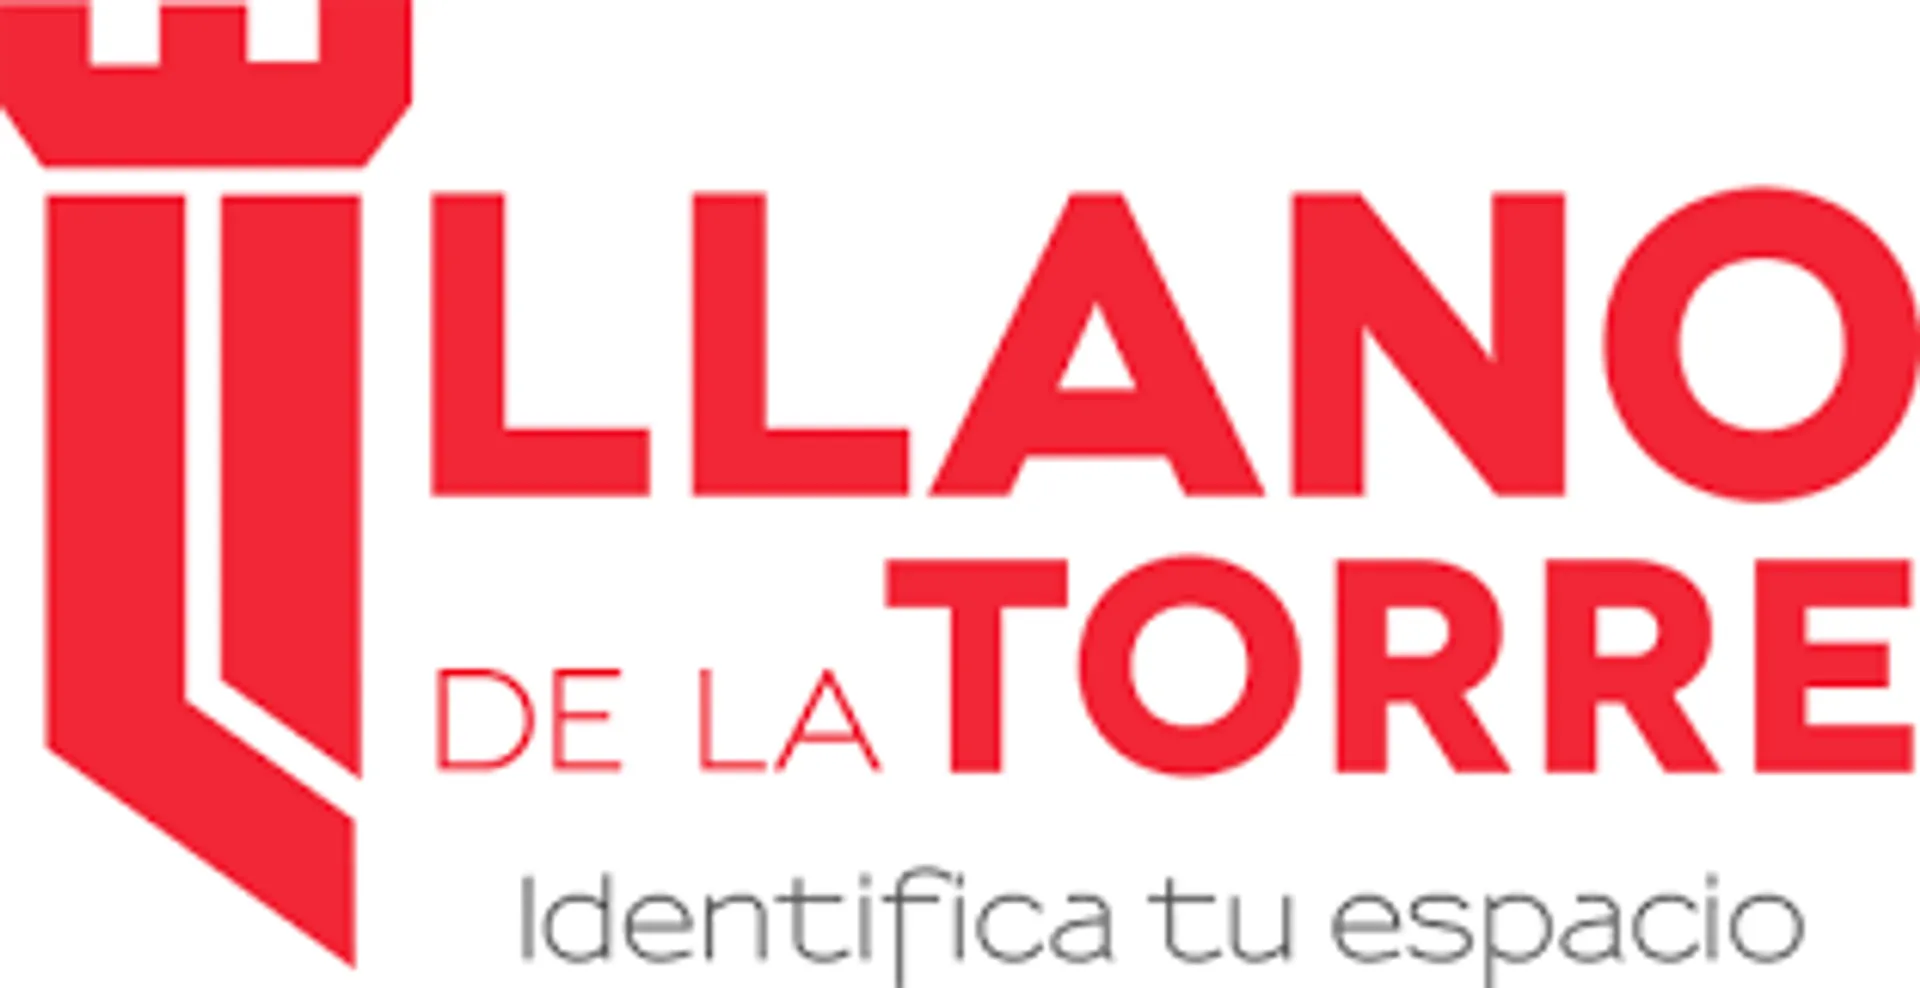 LLANO DE LA TORRE logo